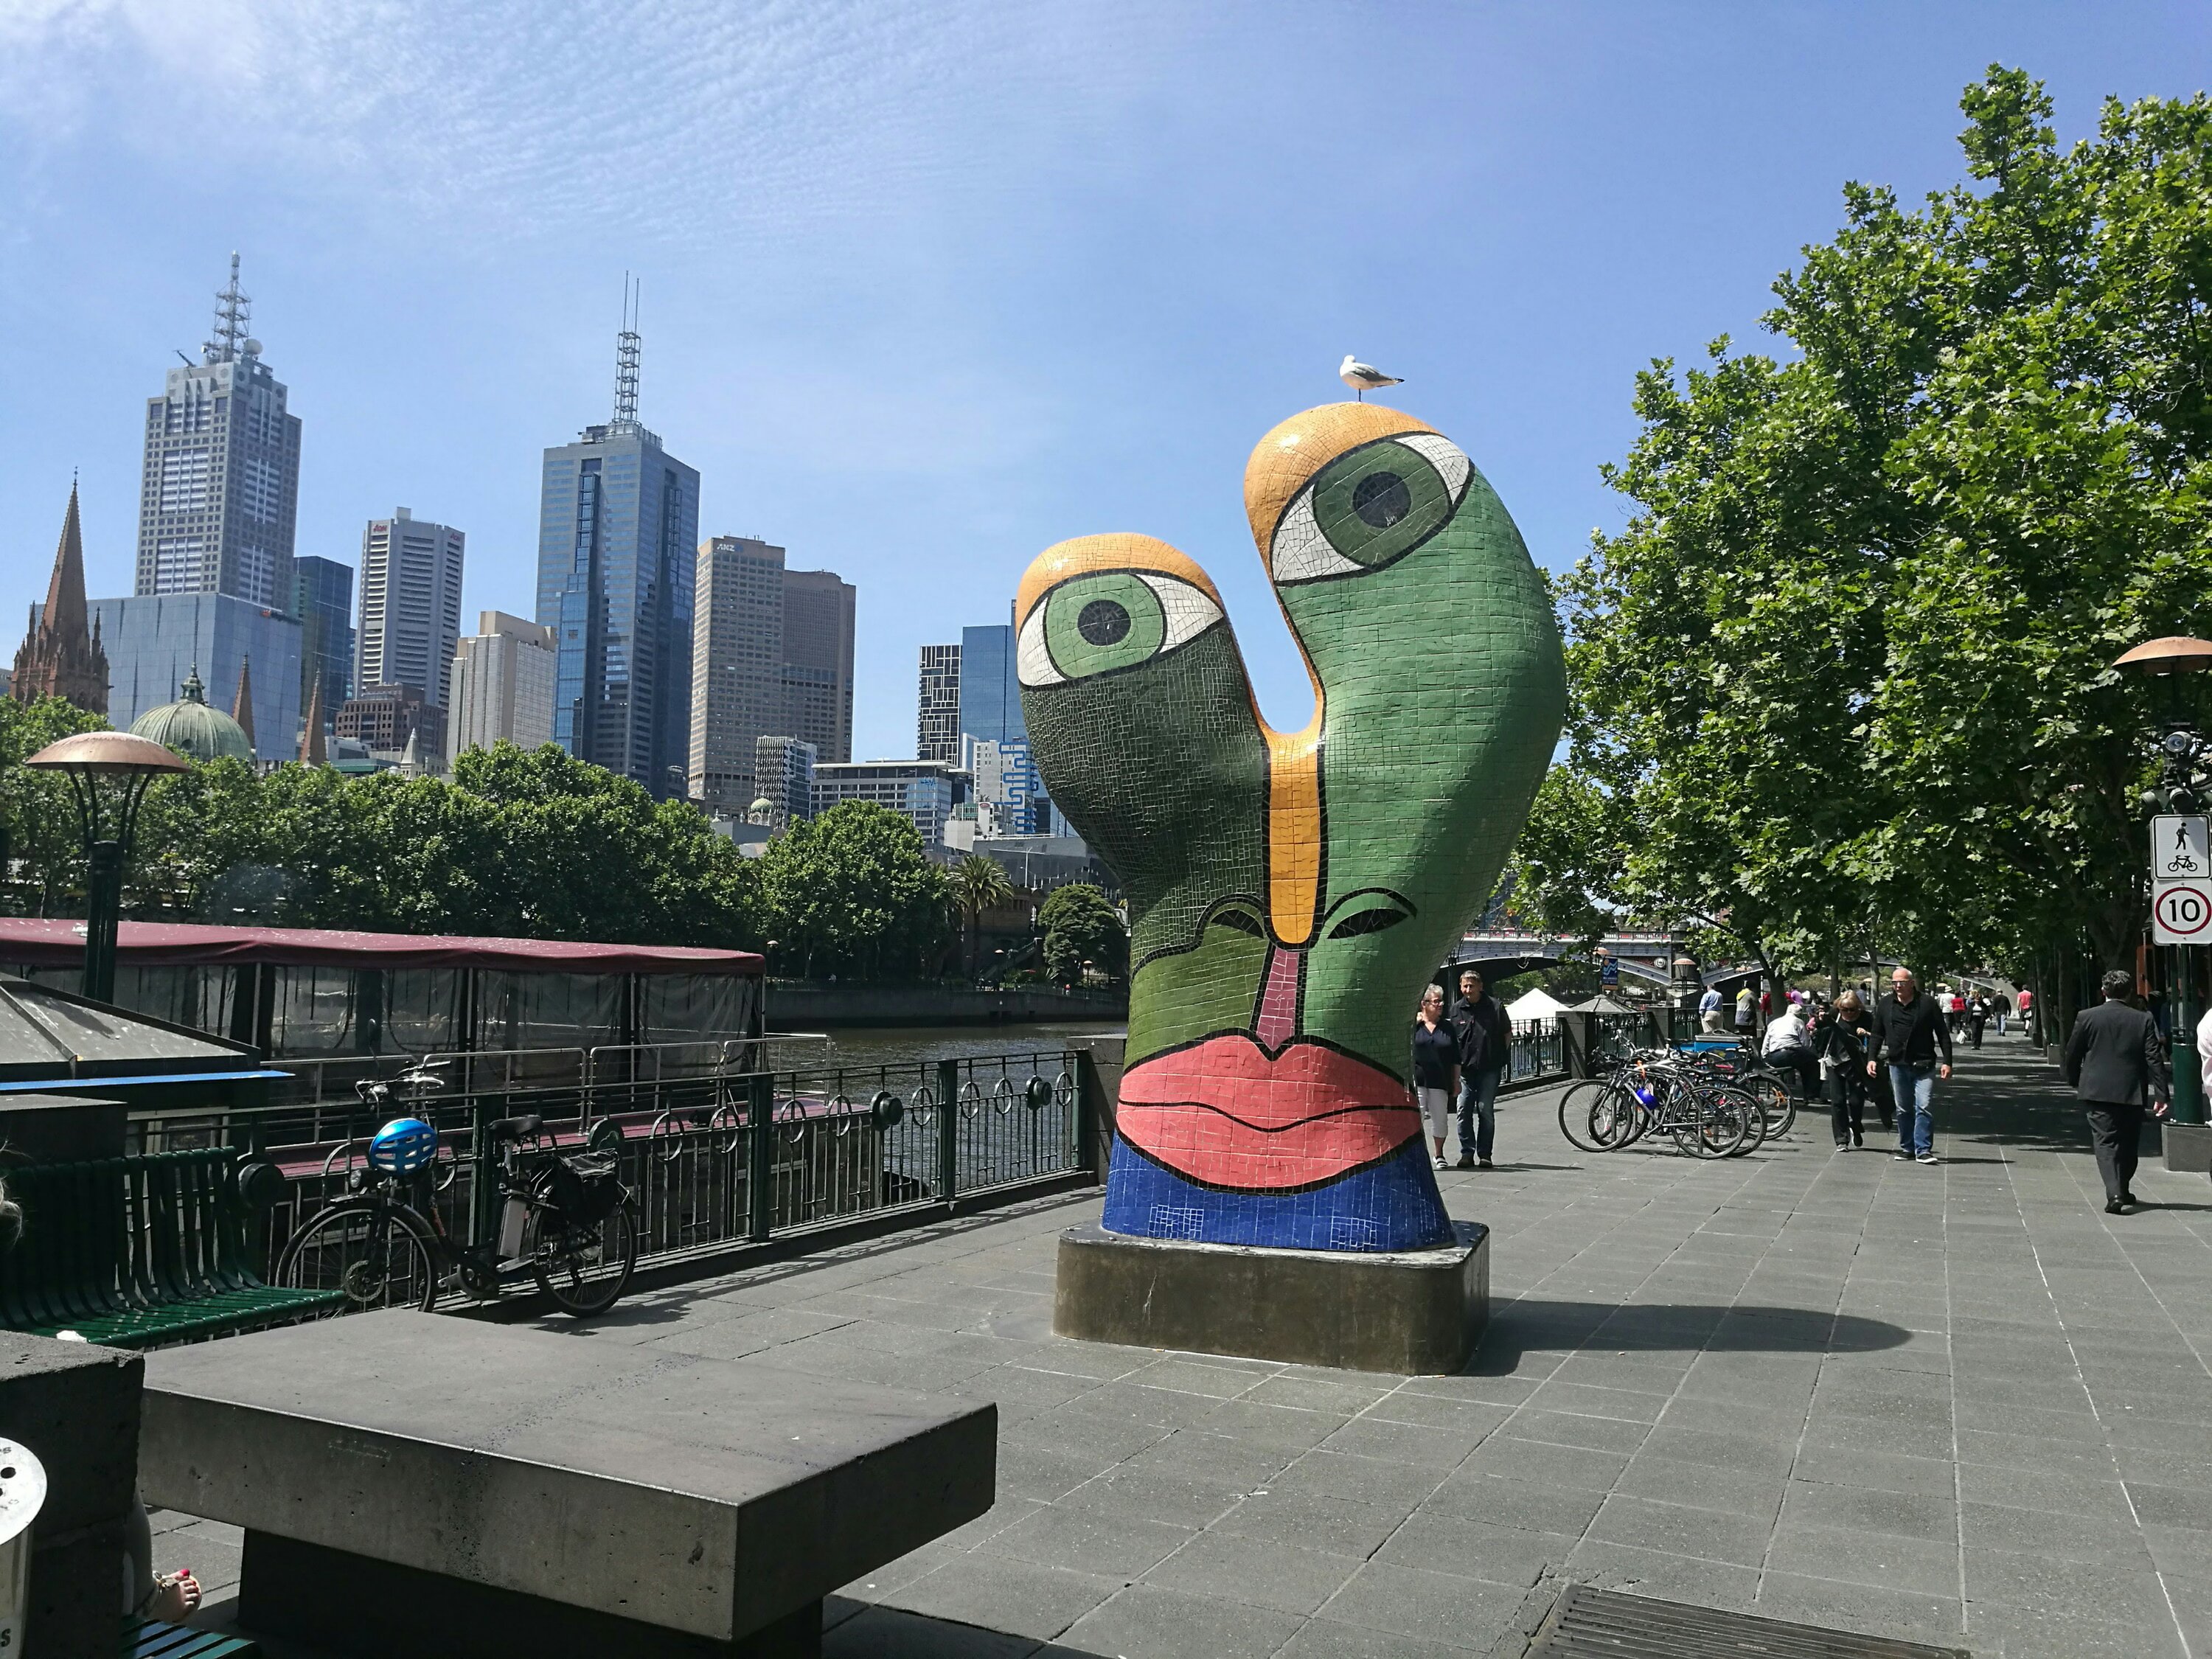 Interesting artwork in Melbourne